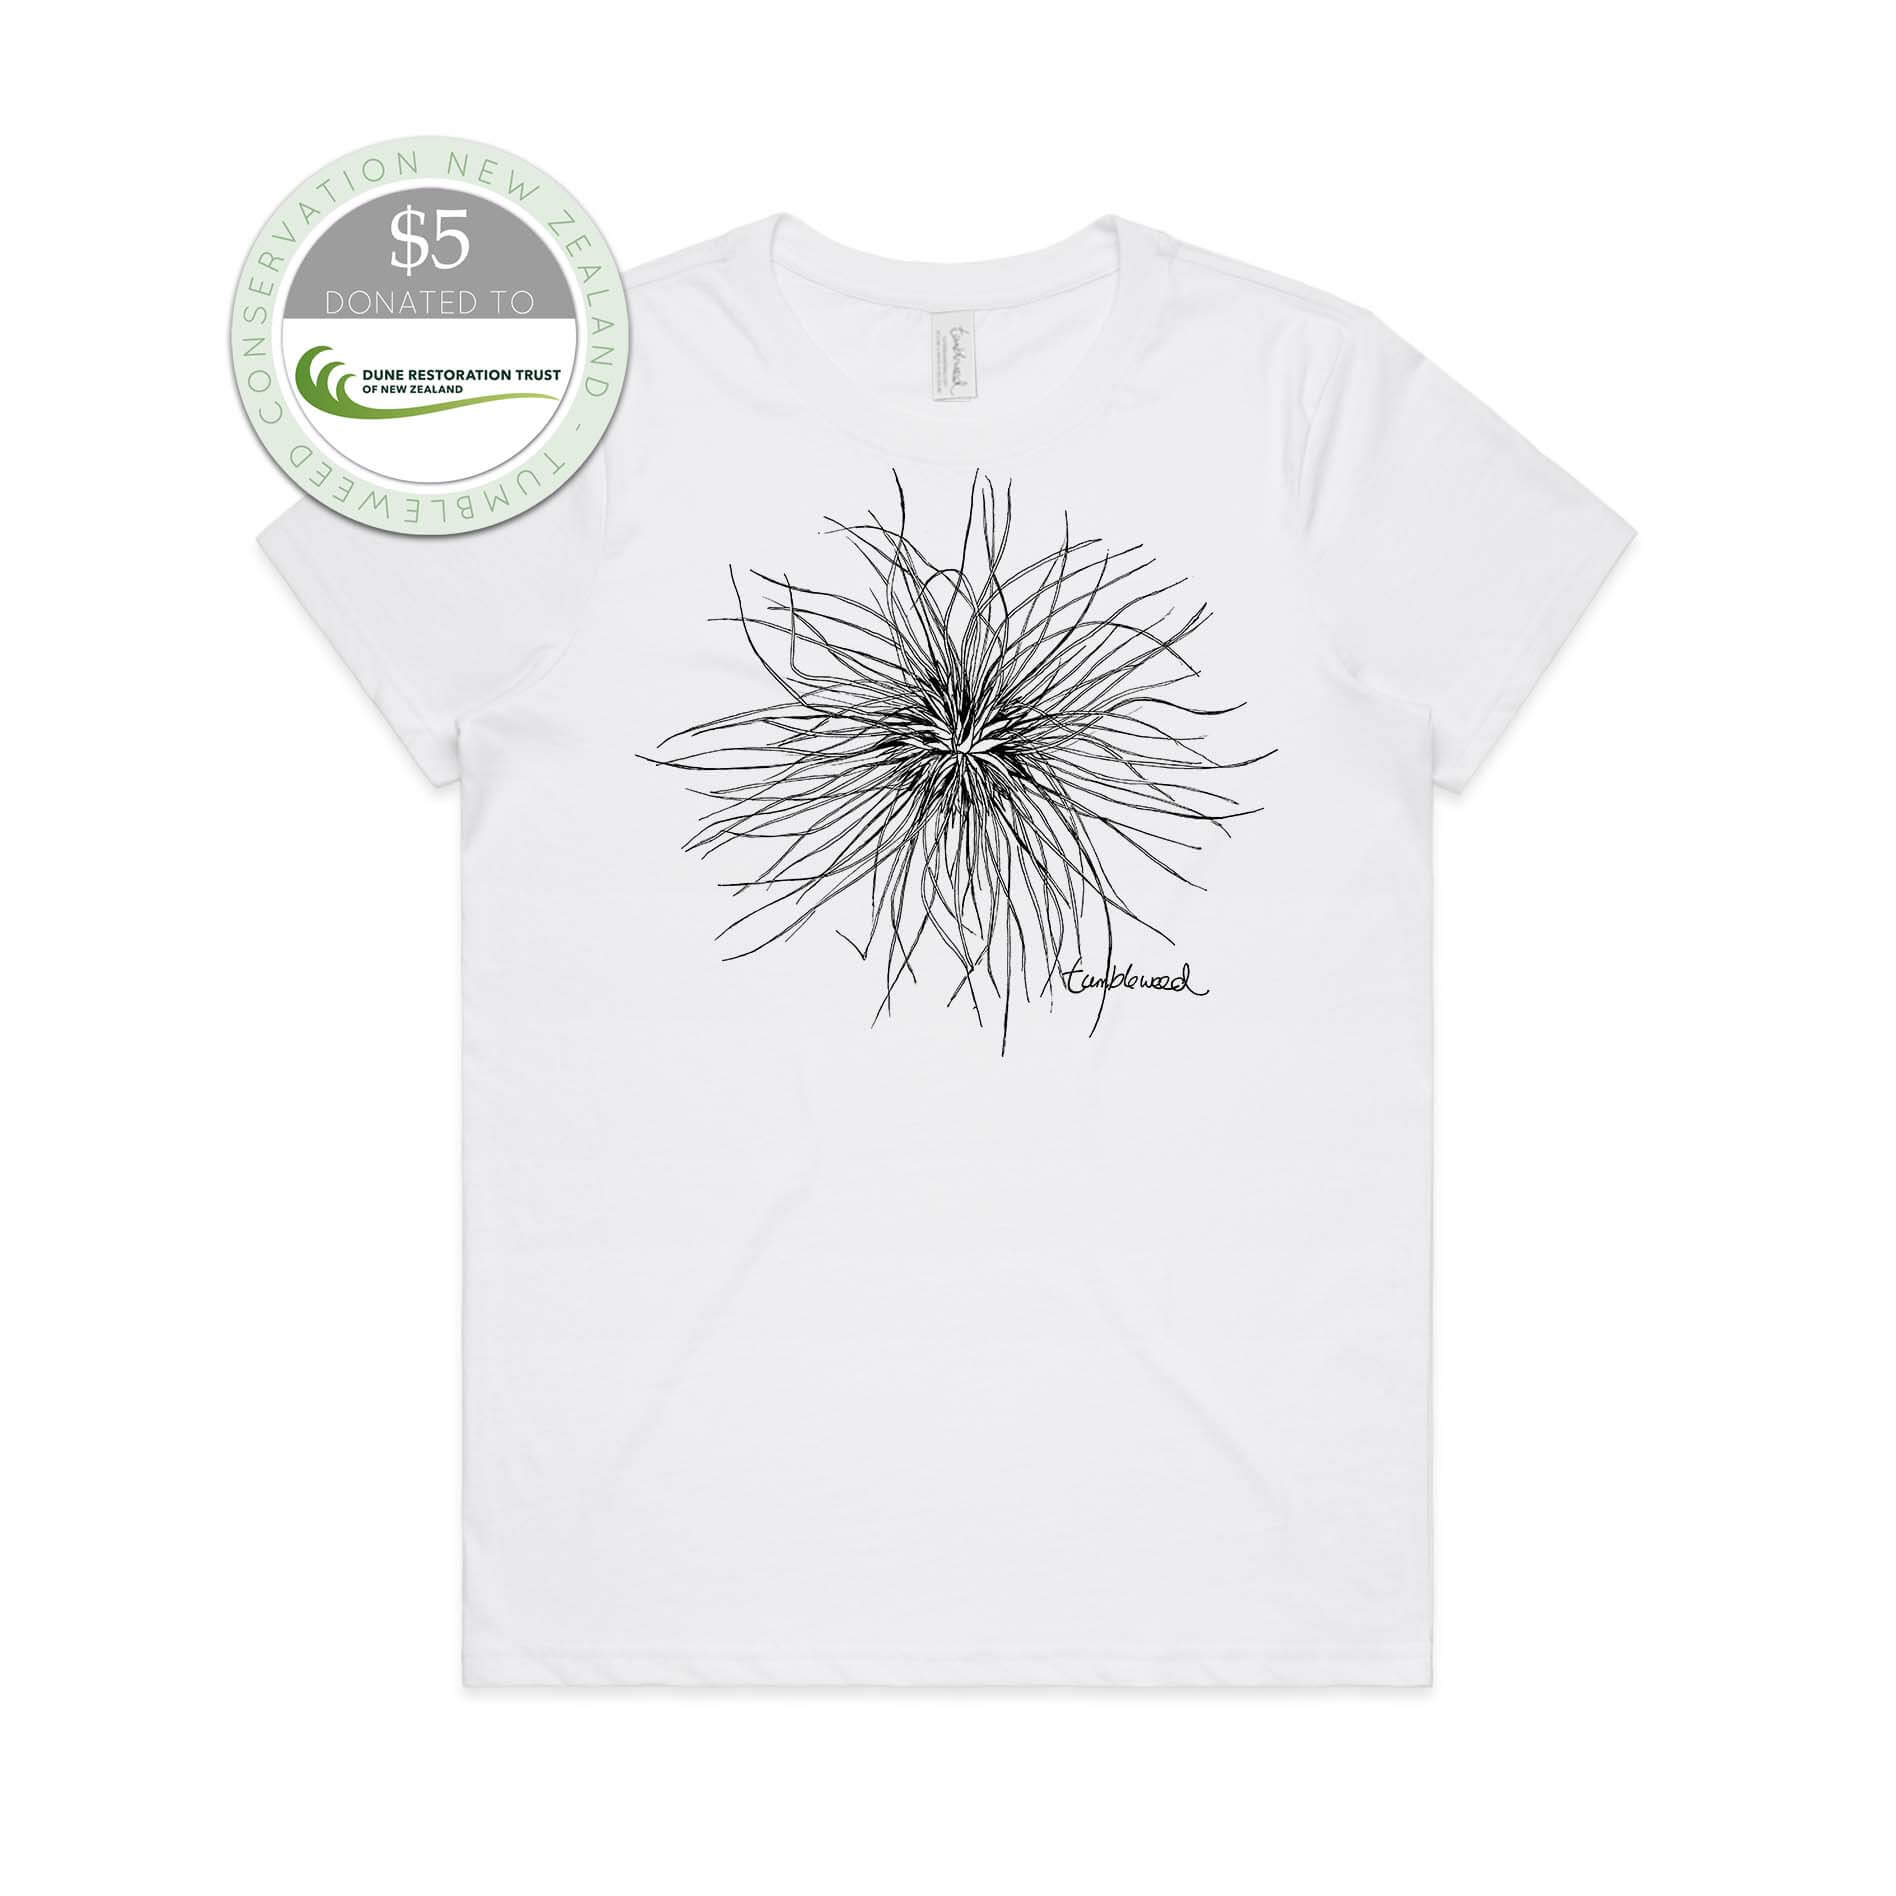 White, female t-shirt featuring a screen printed Tumbleweed design.